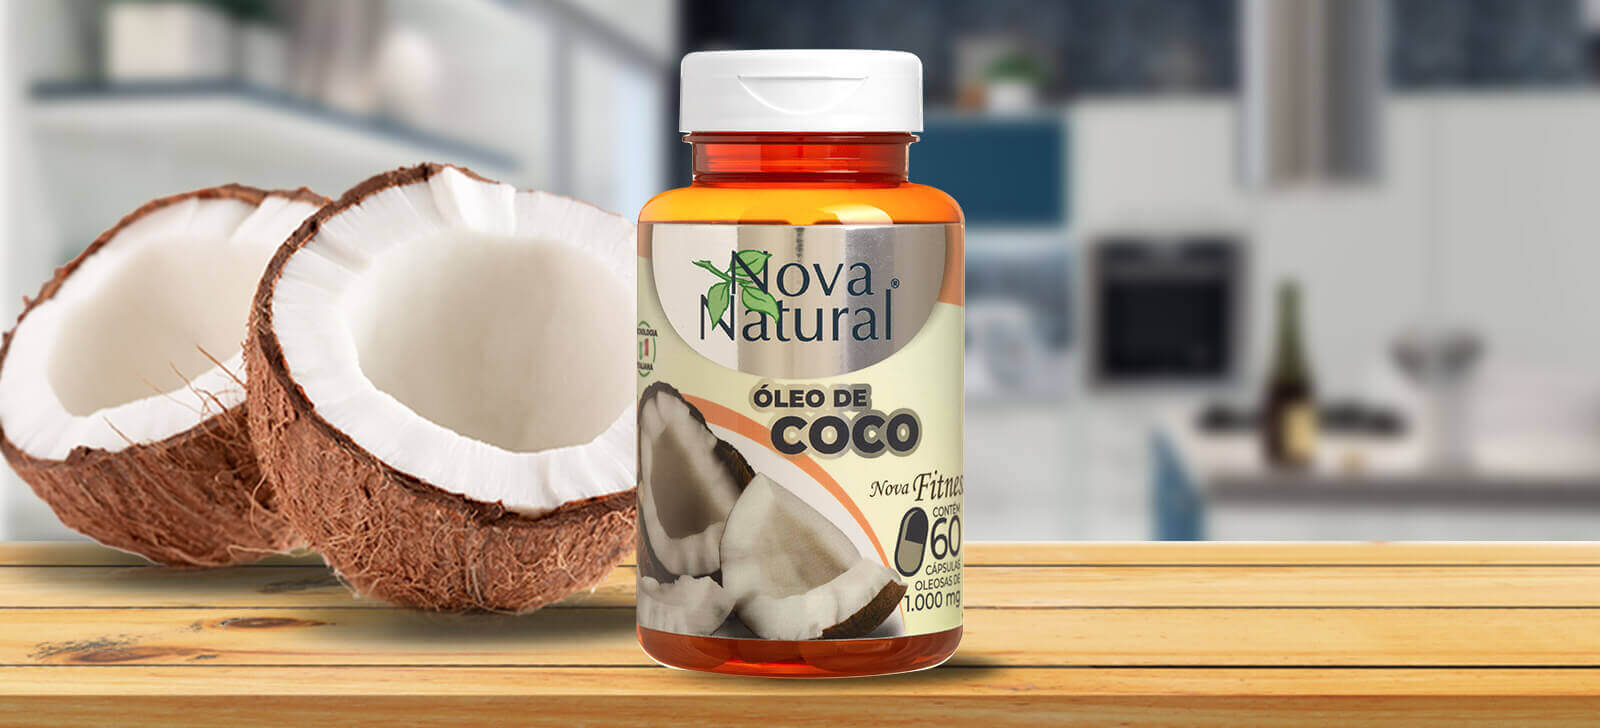 farmacia manipulacao campinas nova natural blog natureza magistral emagrecer entenda fazer perder modelar barriga oleo coco